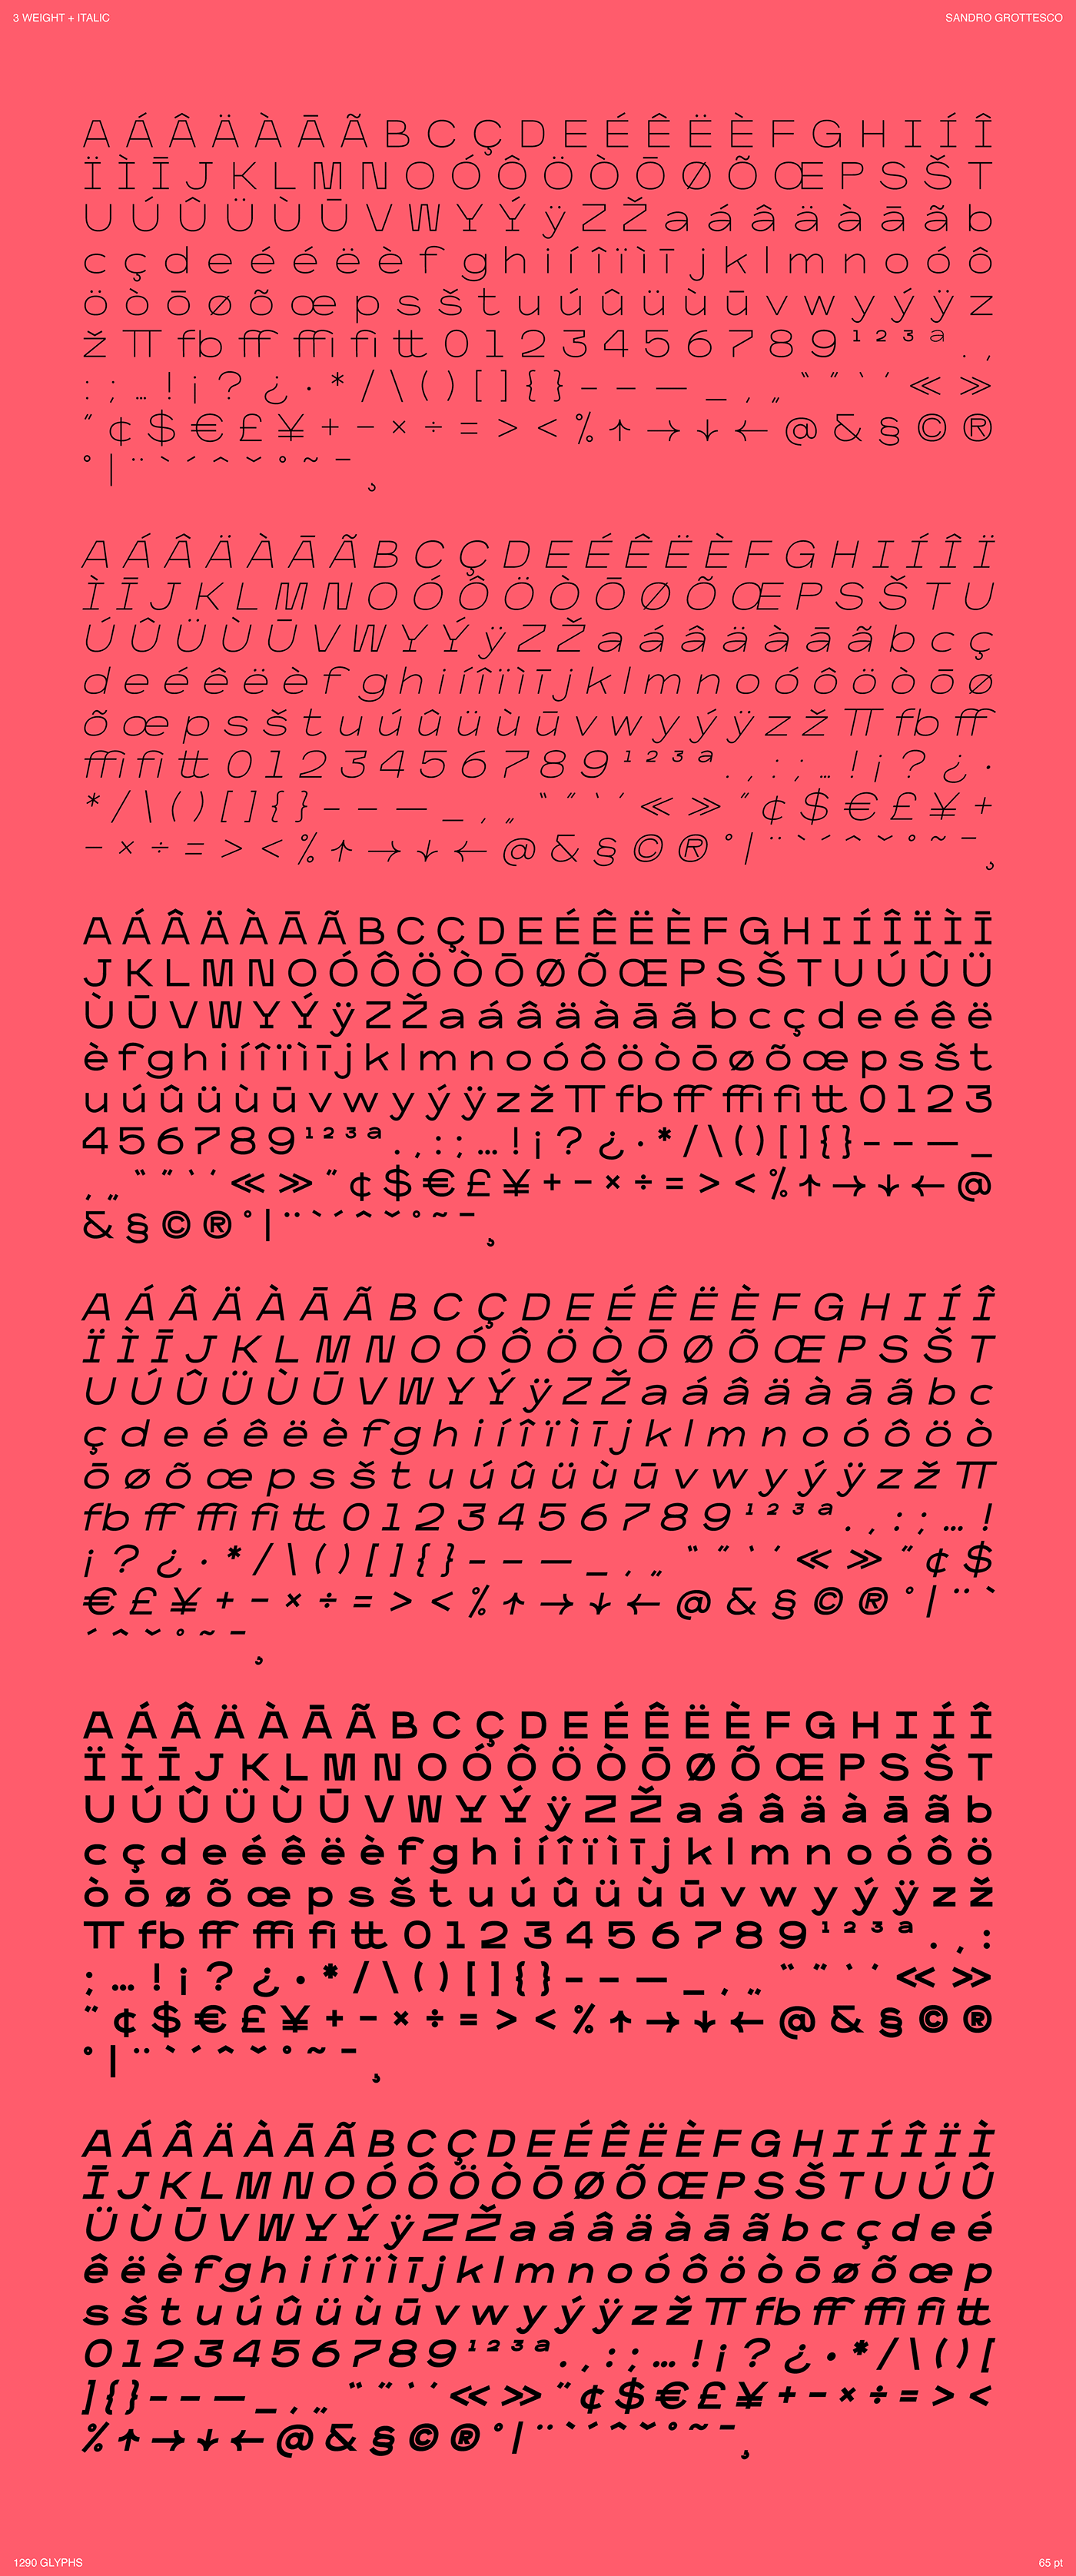 Sandro Grottesco Typeface On Behance